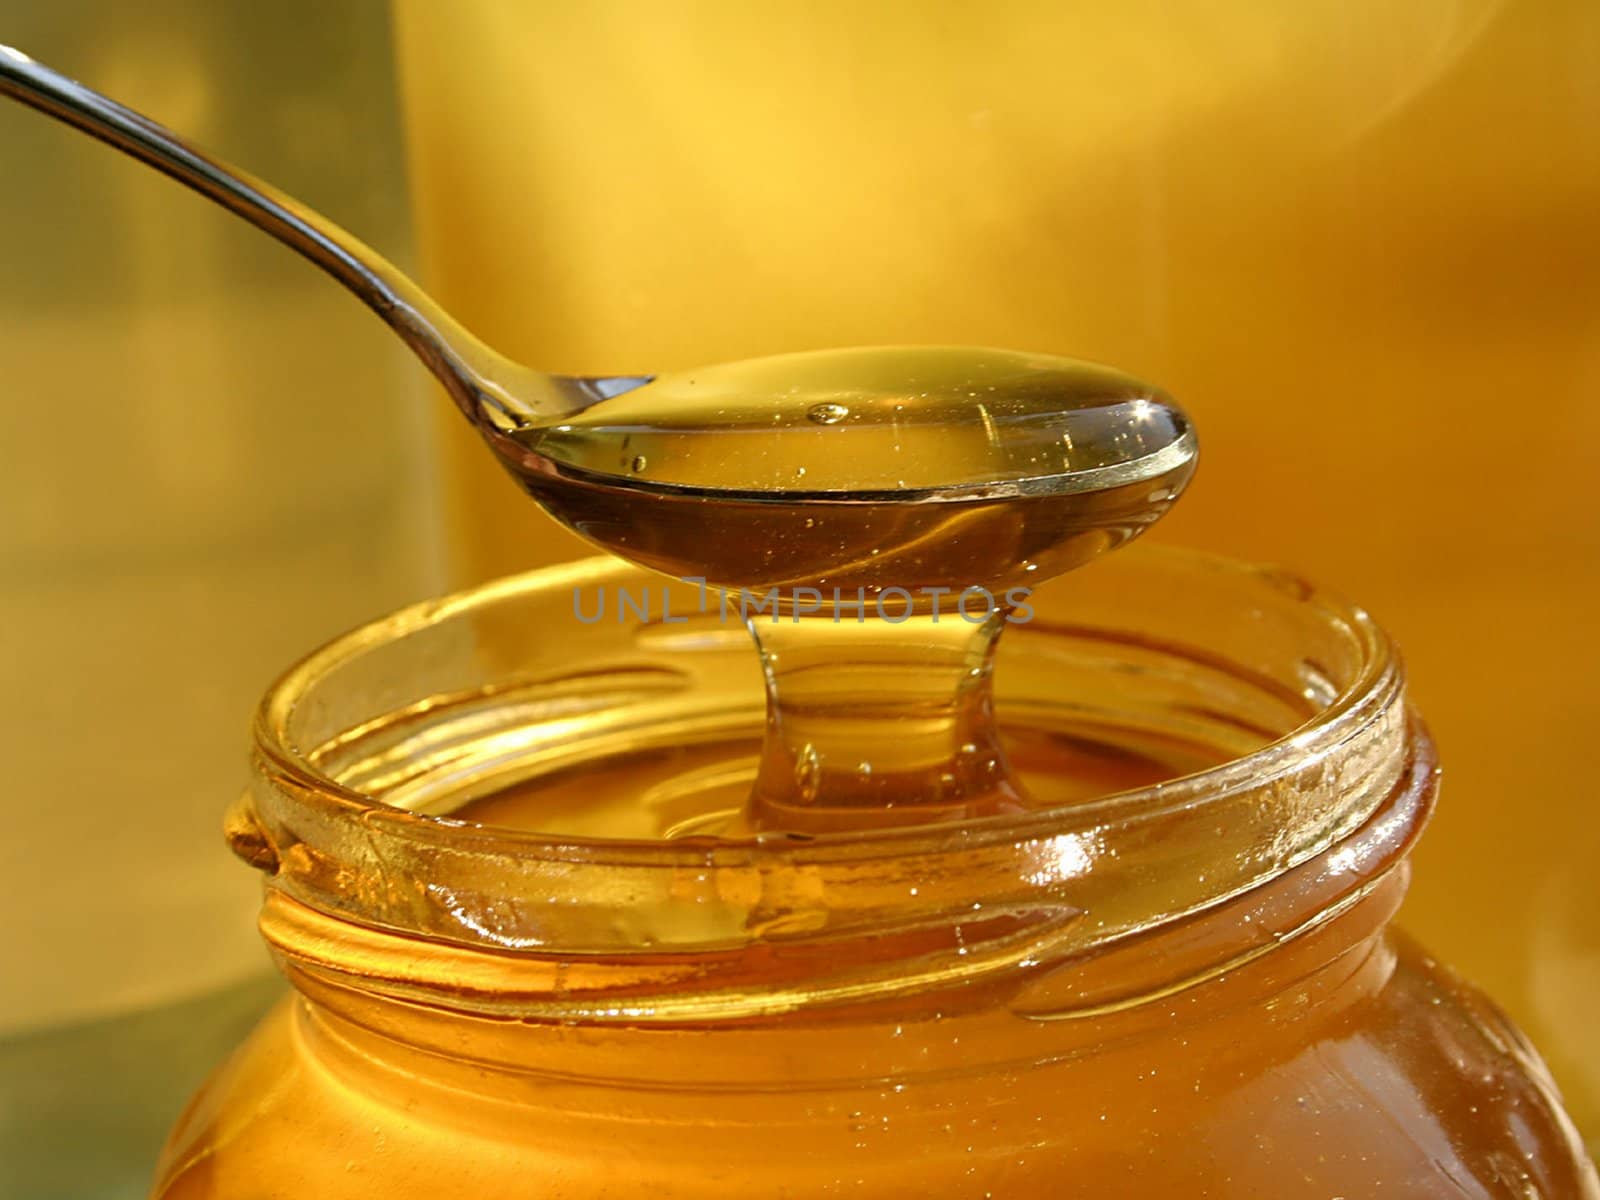 spoon scooping honey from jar by Baltus